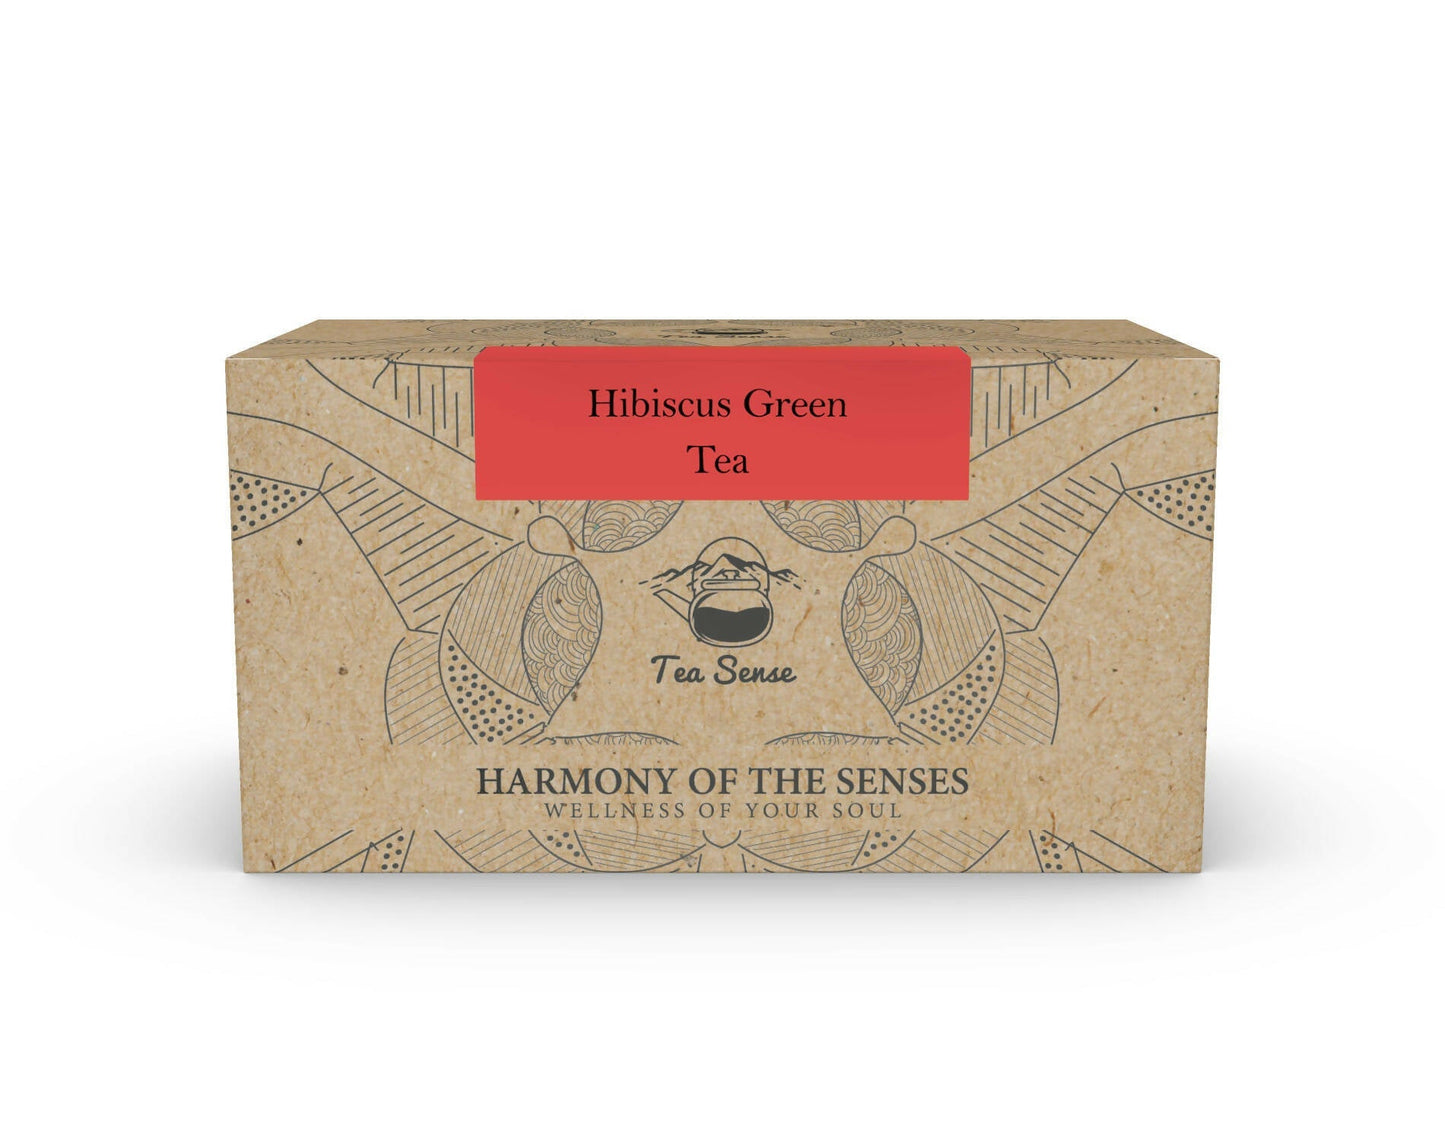 Tea Sense Hibiscus Green Tea Bags Box - buy in USA, Australia, Canada